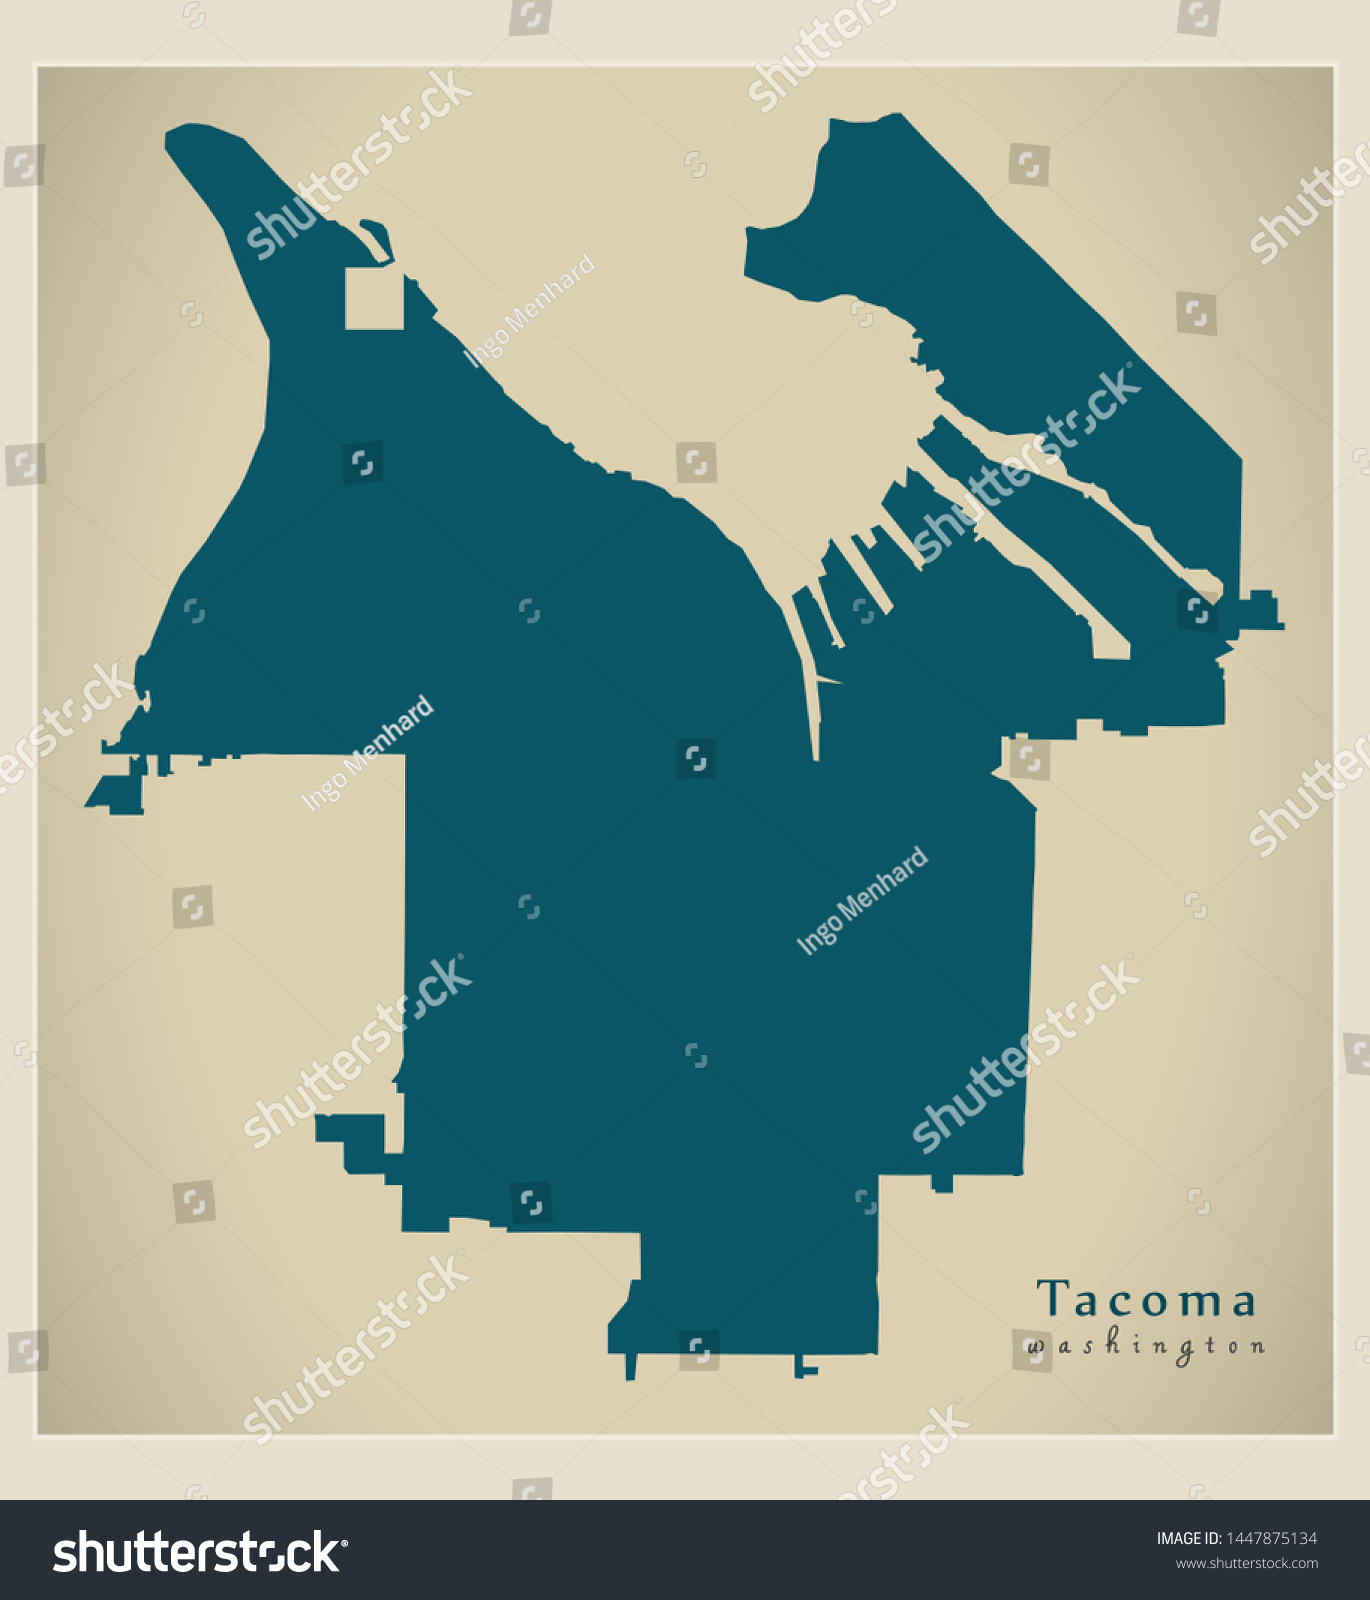 SVG of Modern City Map - Tacoma Washington city of the USA svg